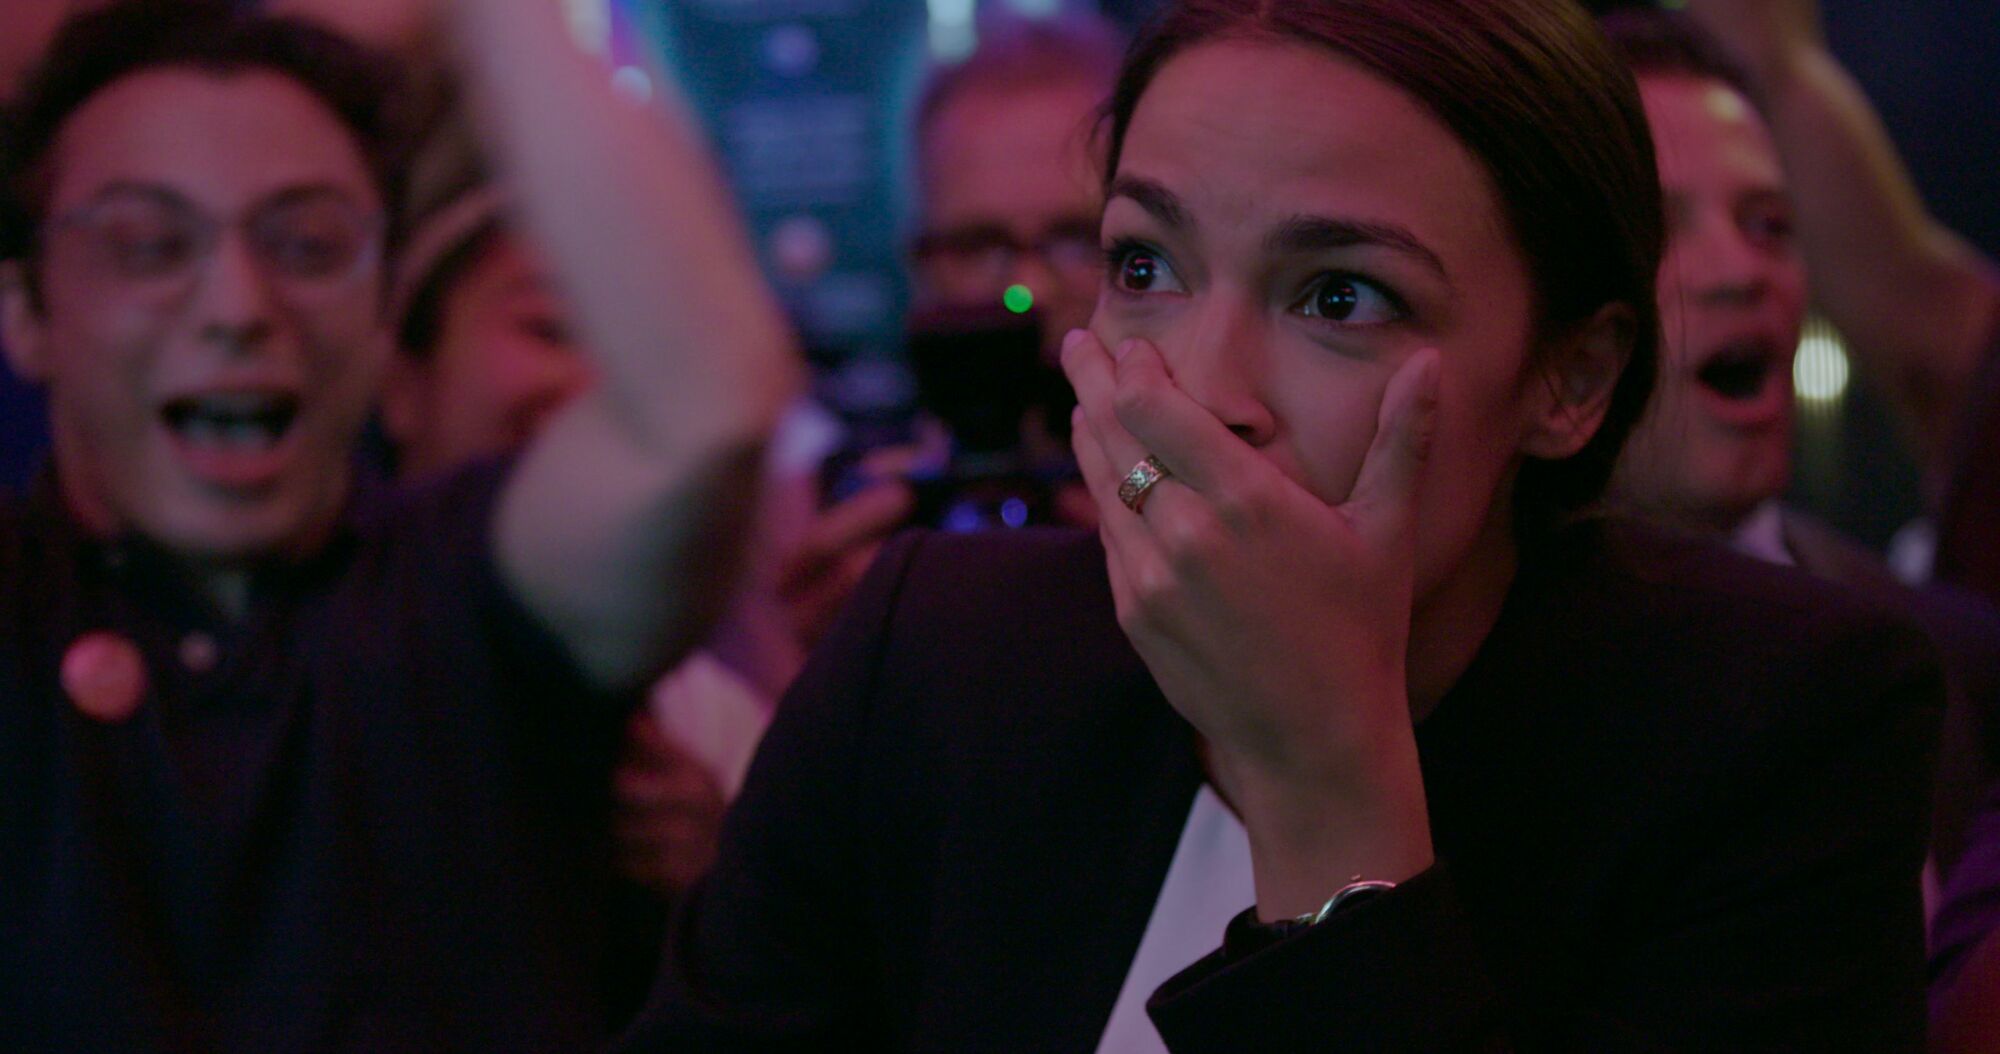 Alexandria Ocasio-Cortez looks shocked while celebrating.